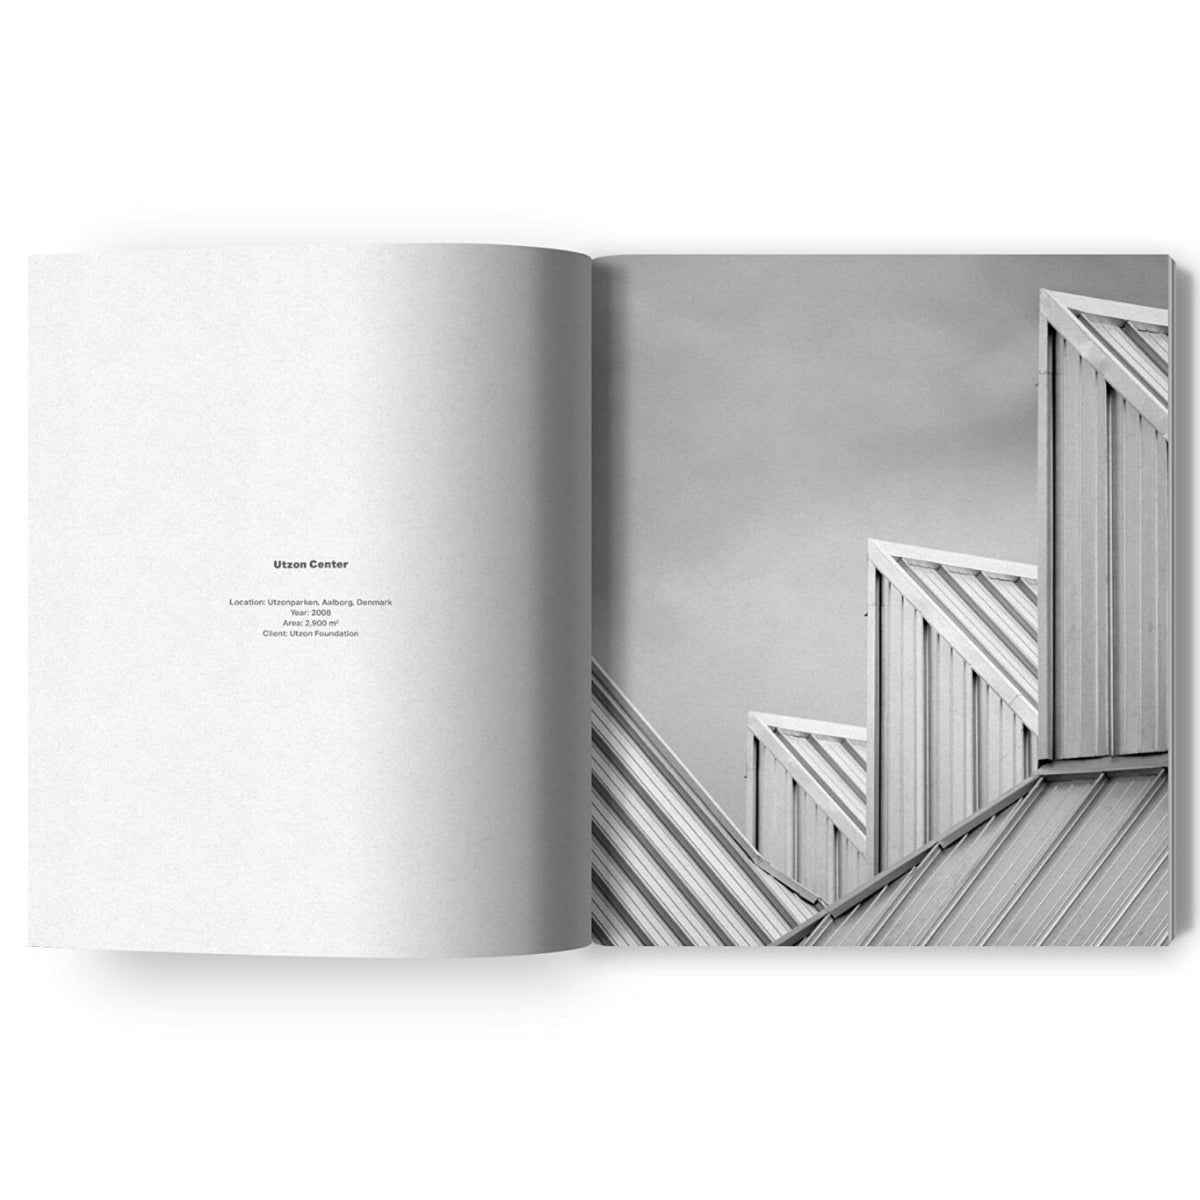 New Mags | Joy - Kim Utzon Architect - Bolighuset Werenberg